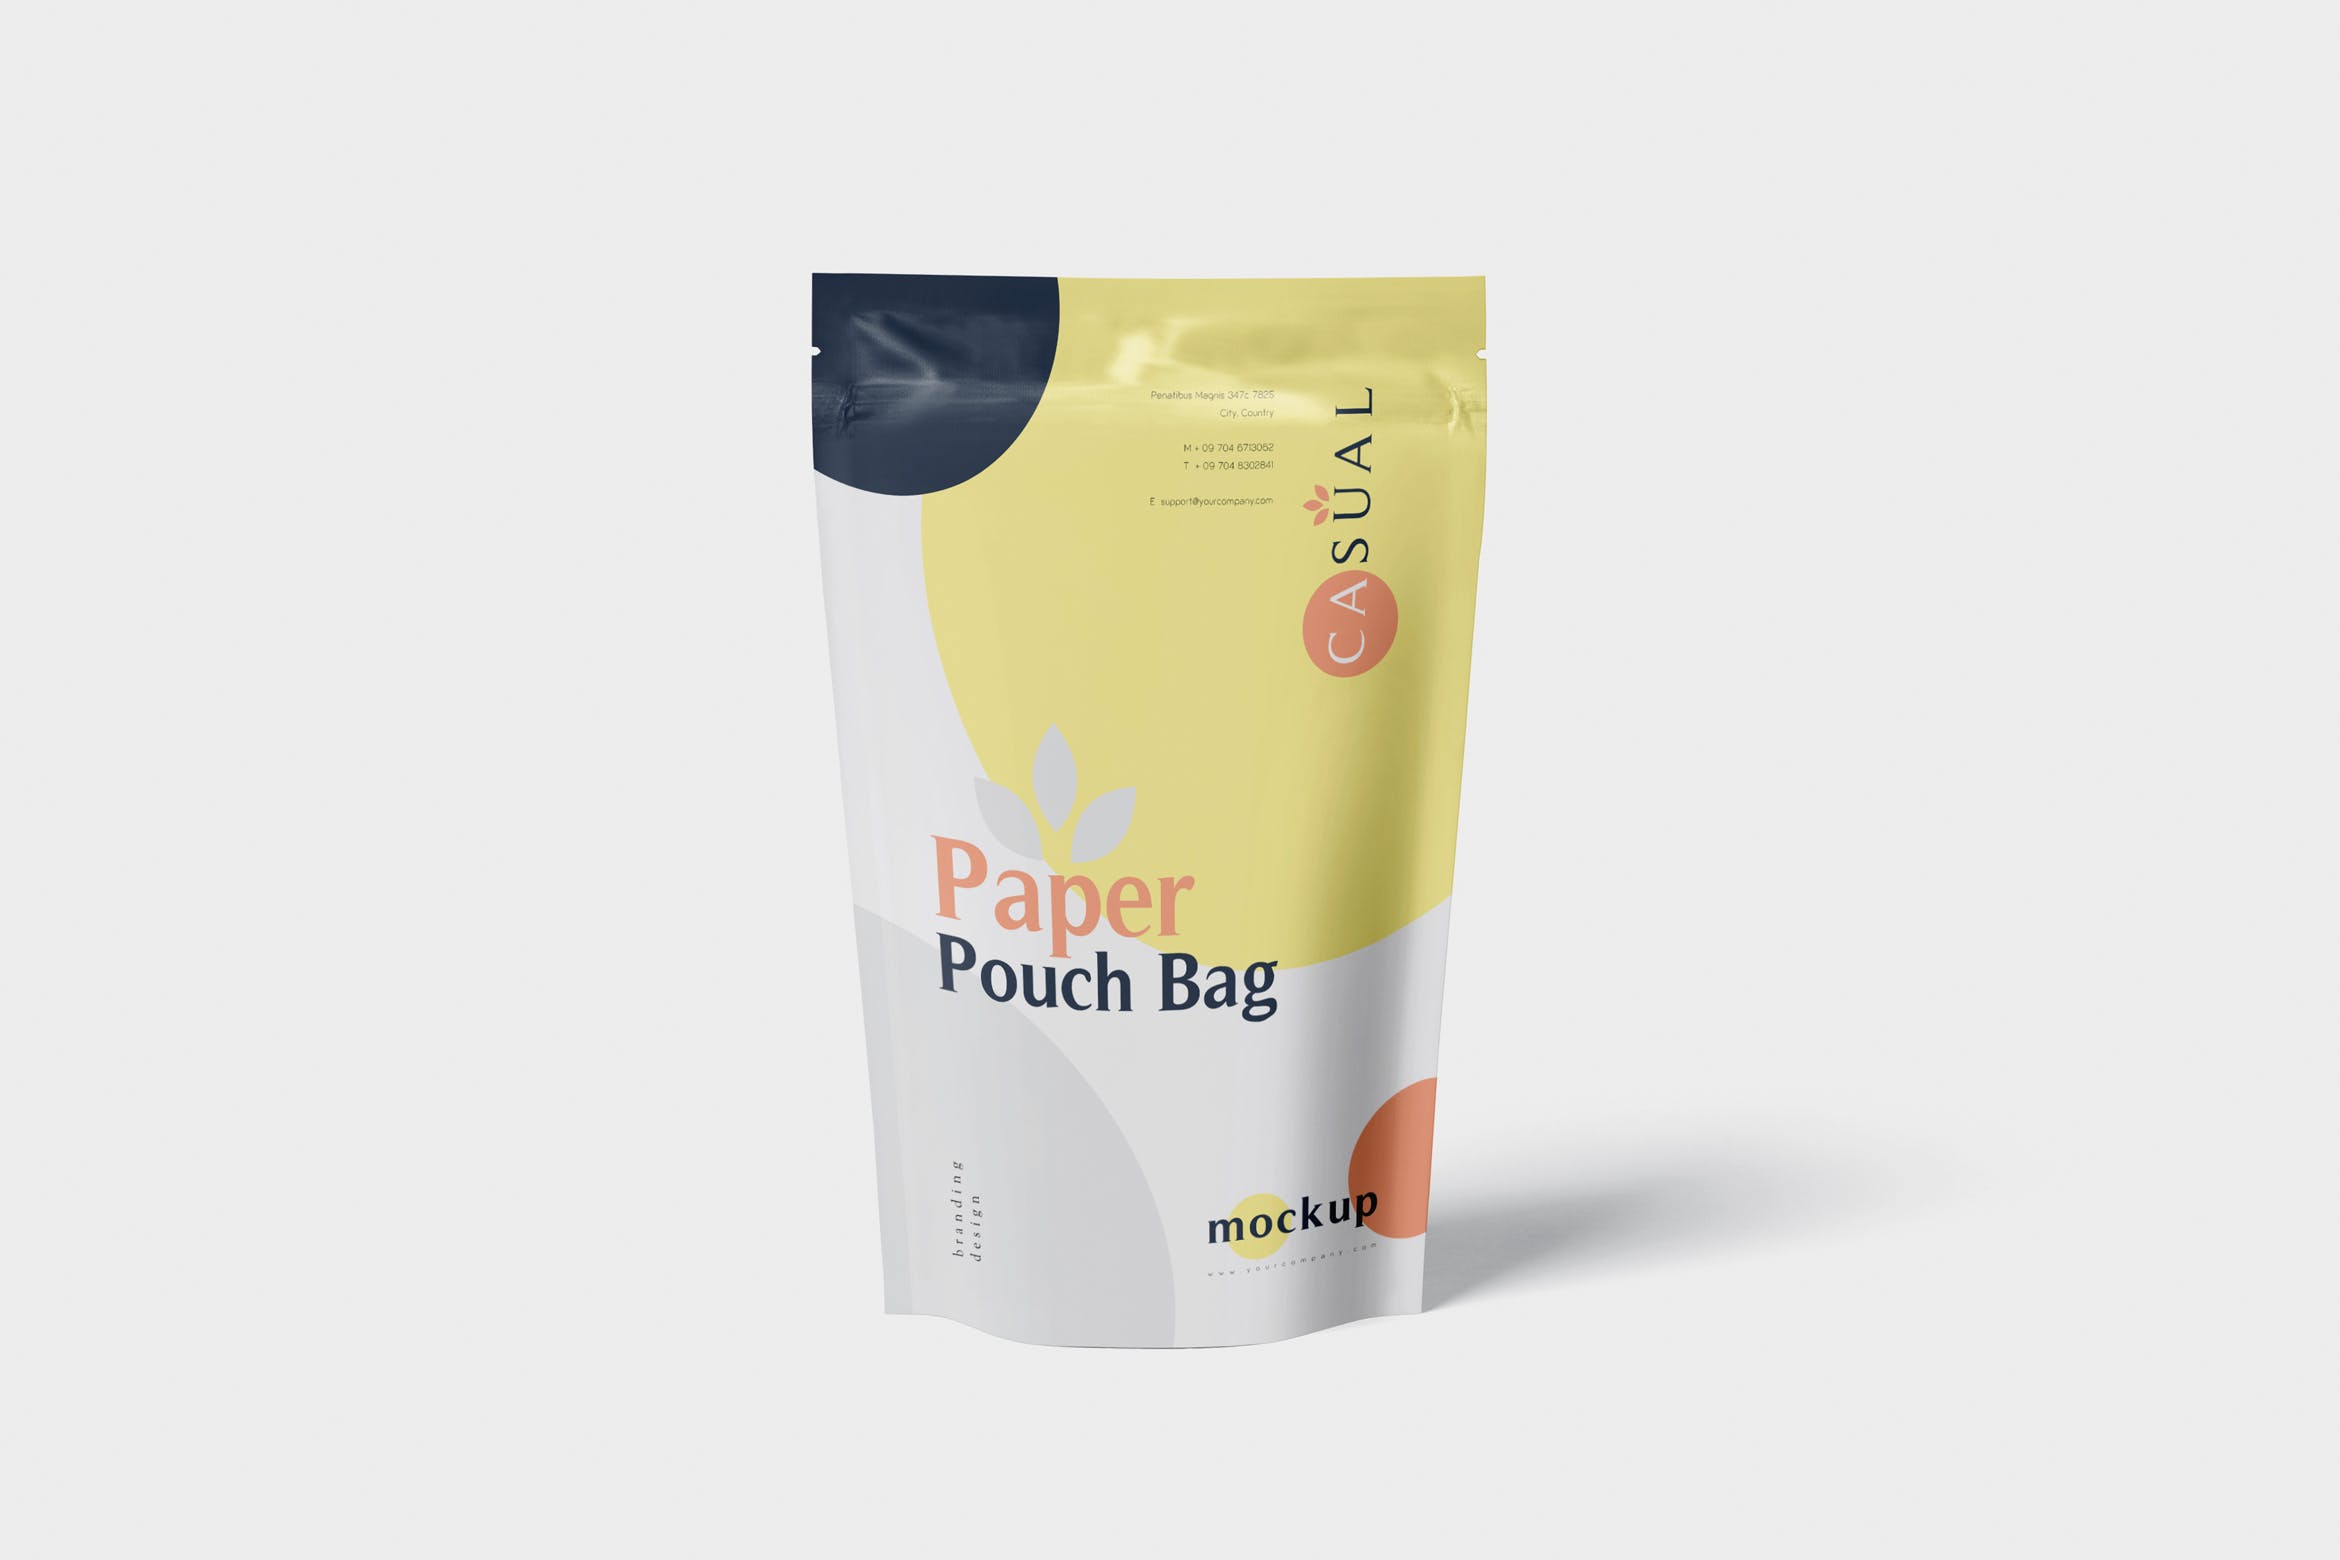 食品自封袋包装设计效果图第一素材精选 Paper Pouch Bag Mockup – Large Size插图